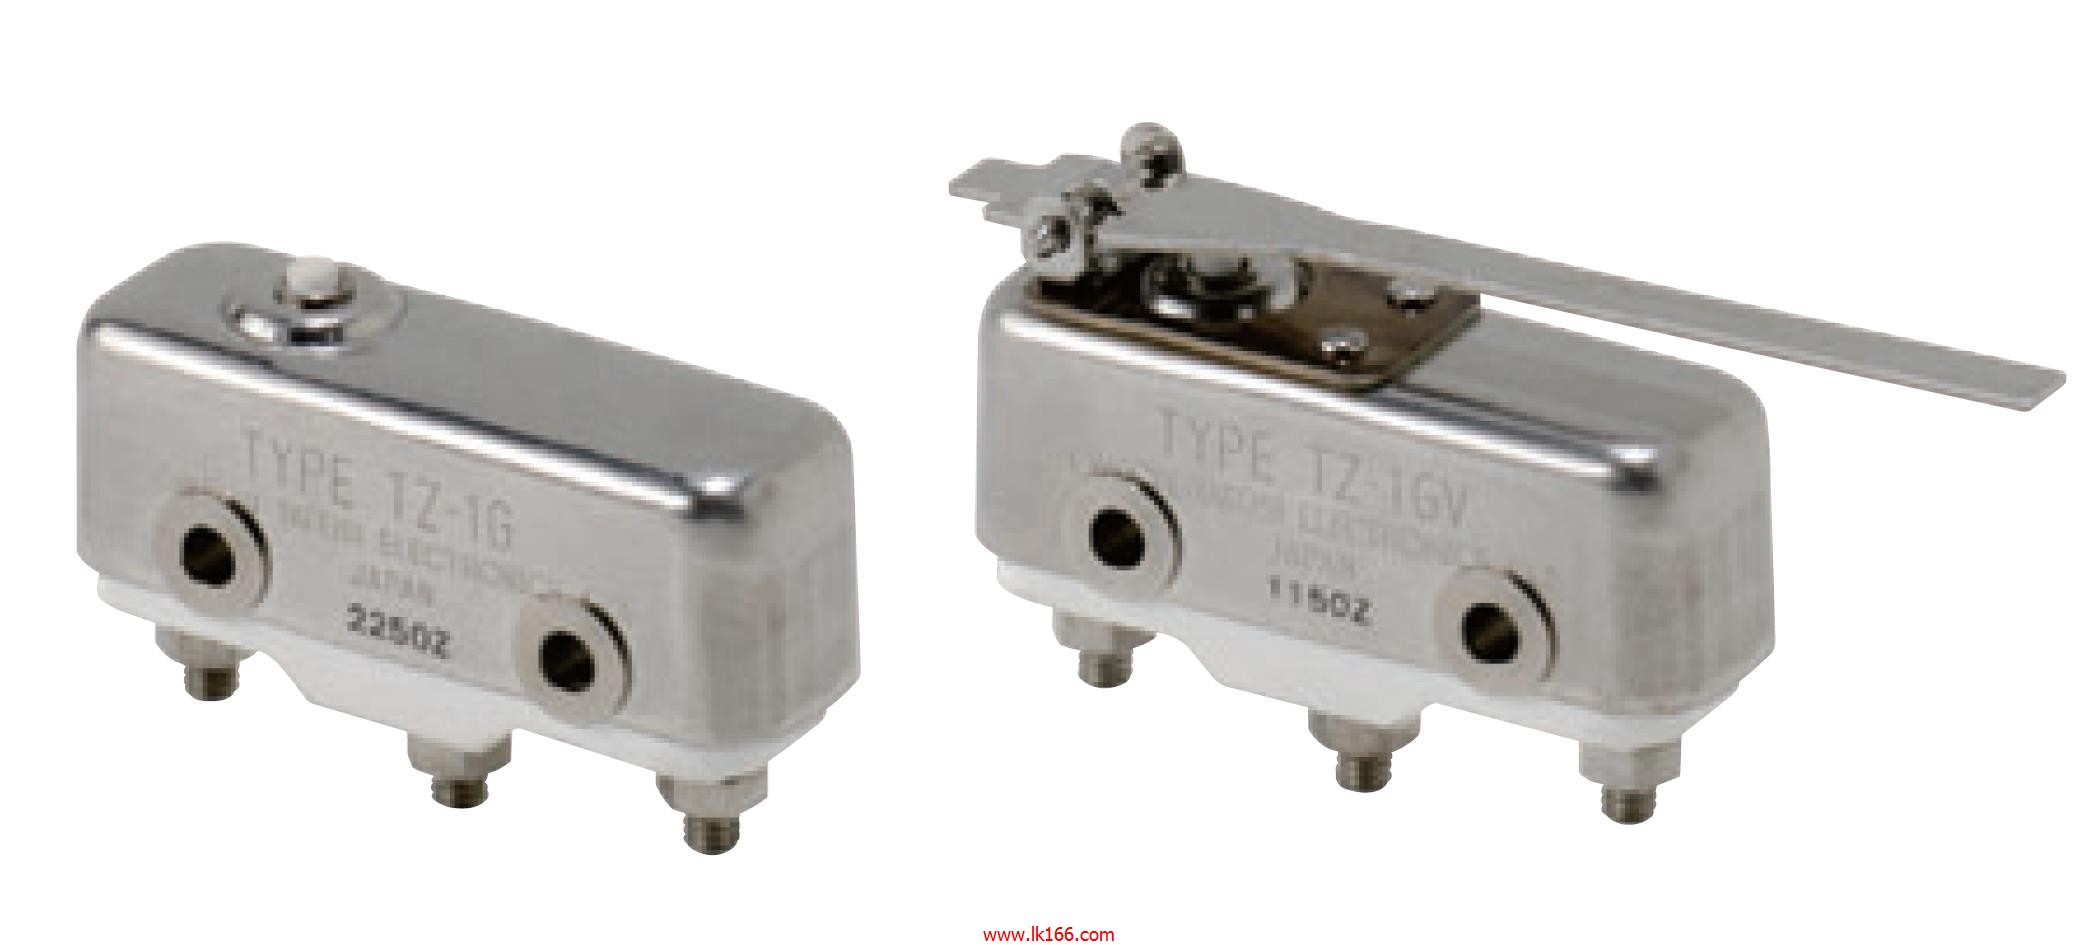 OMRON High-temperature Basic Switch TZ-1GV22